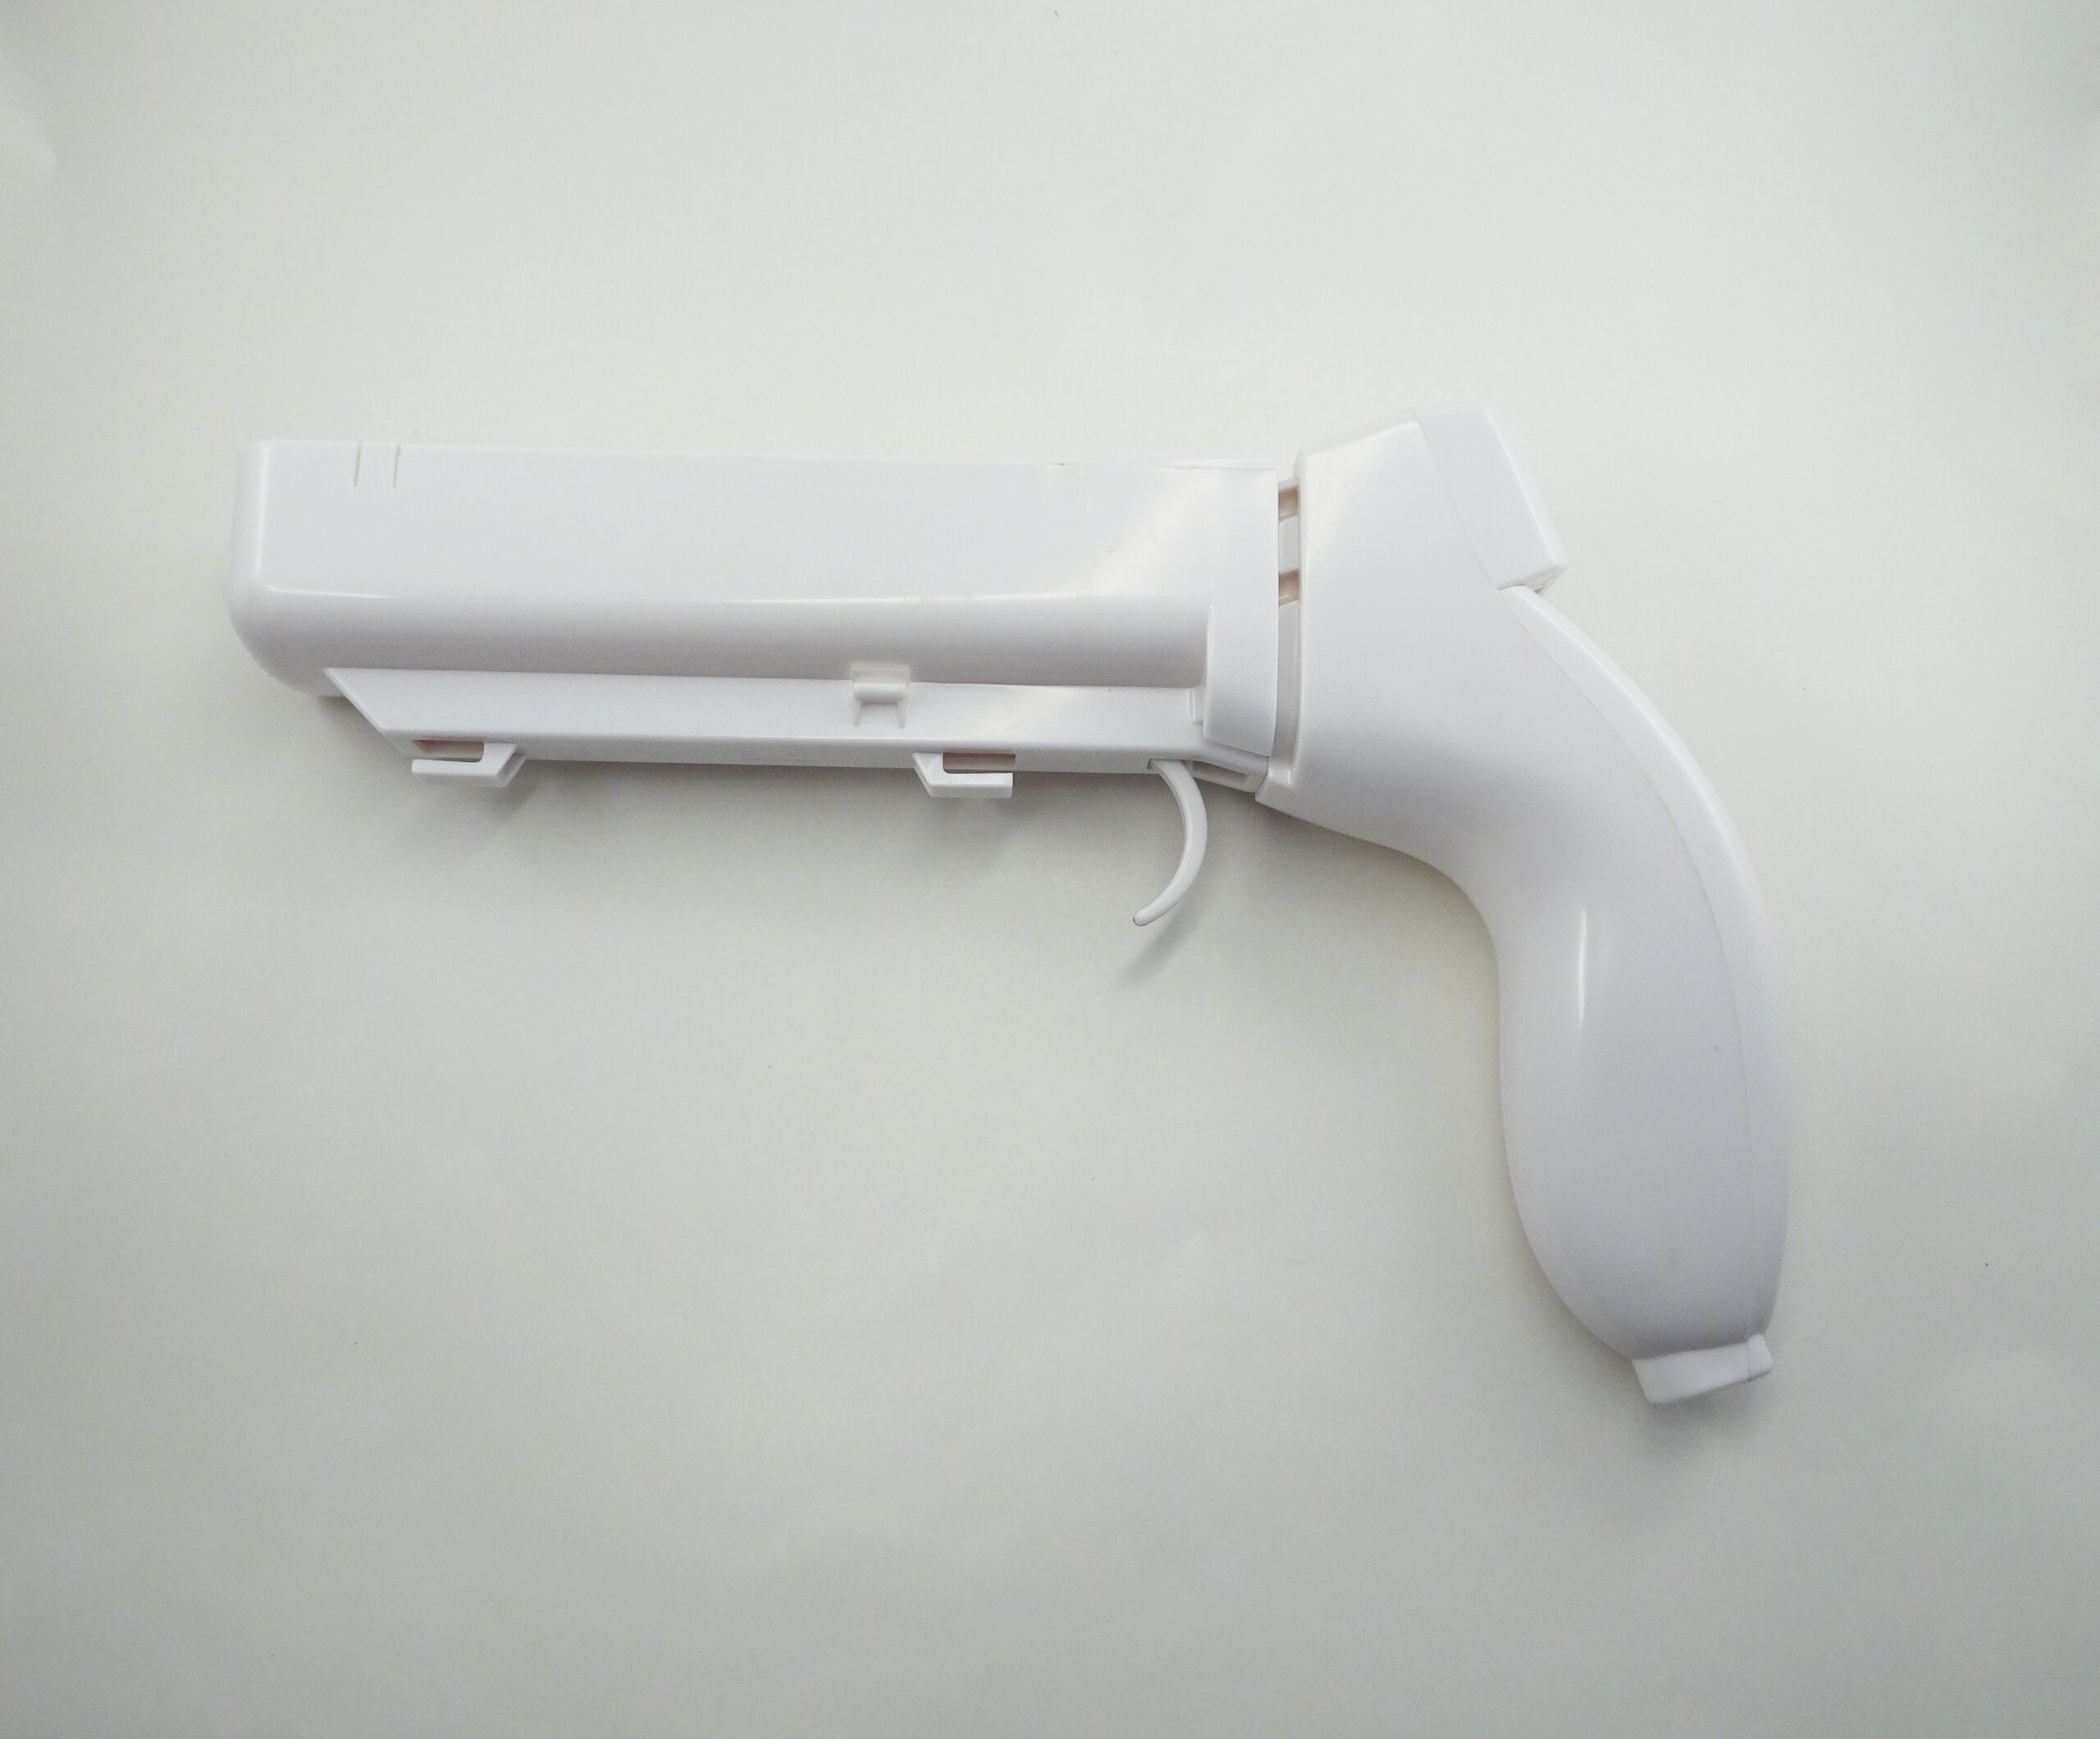 RoHS Gun – Wii Remote & Nunchuk Controller